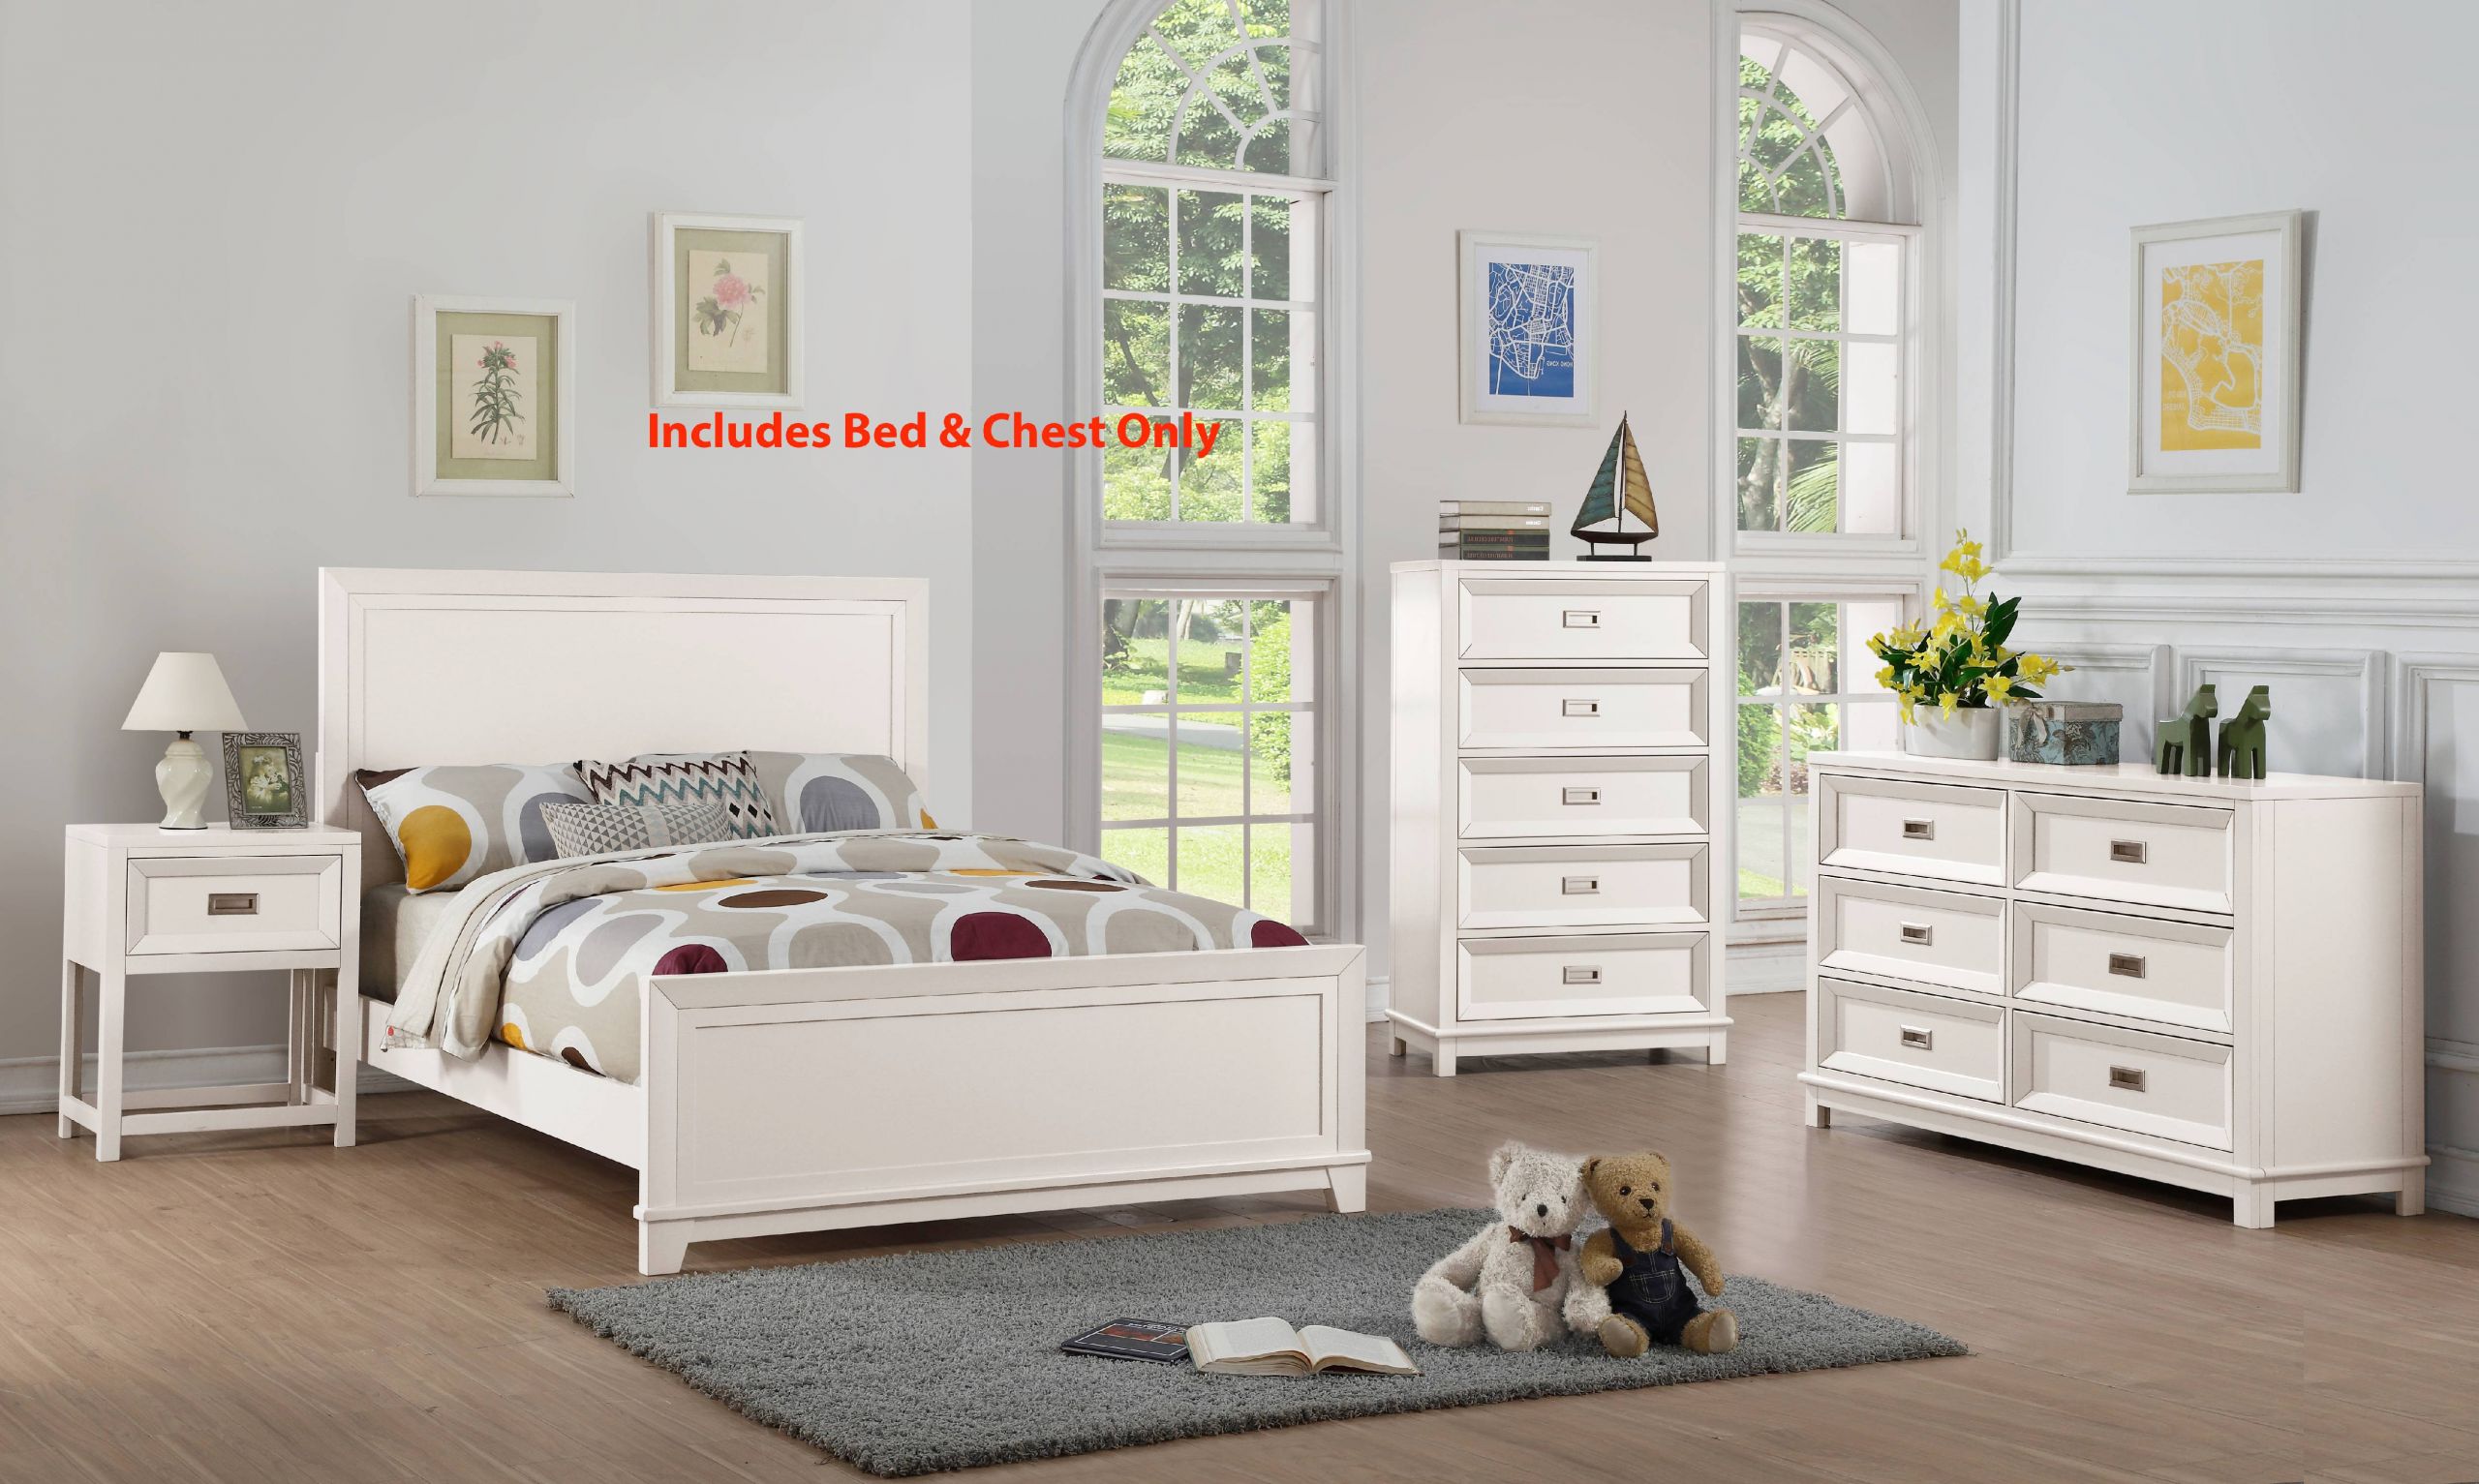 Walmart Kids Bedroom Furniture
 Victoria 2 Piece Twin Size White Wood Contemporary Kids